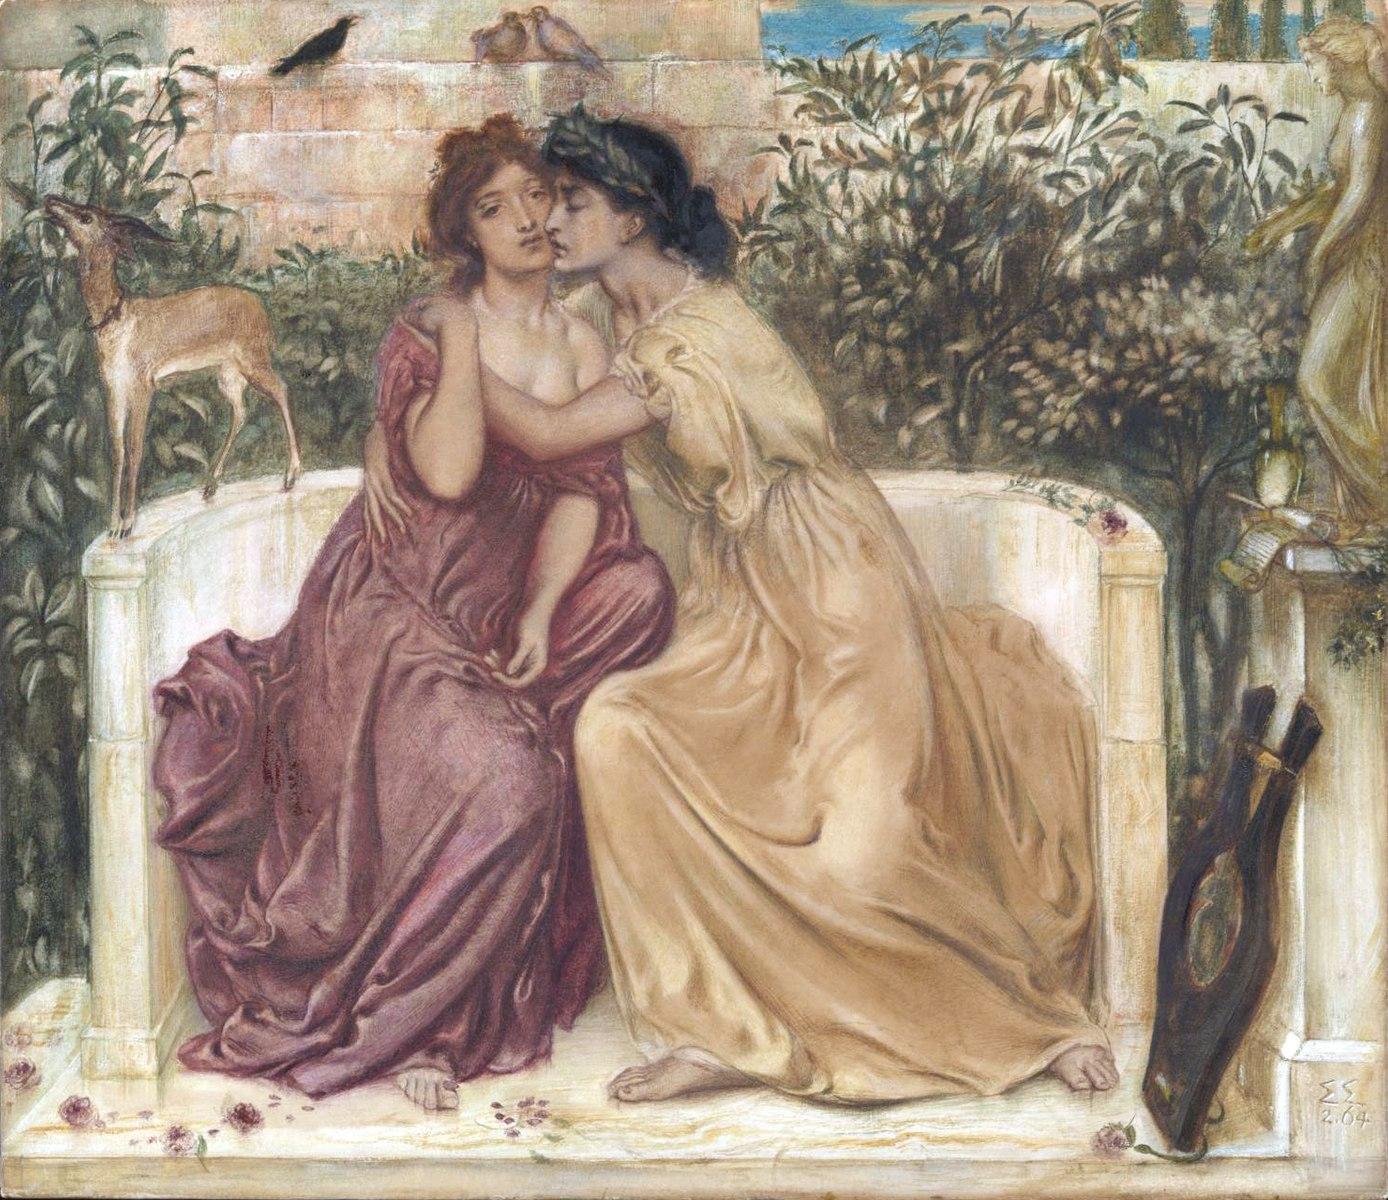 Simeon Solomon's 1864 Sappho and Erinna in a Garden at Mytilene